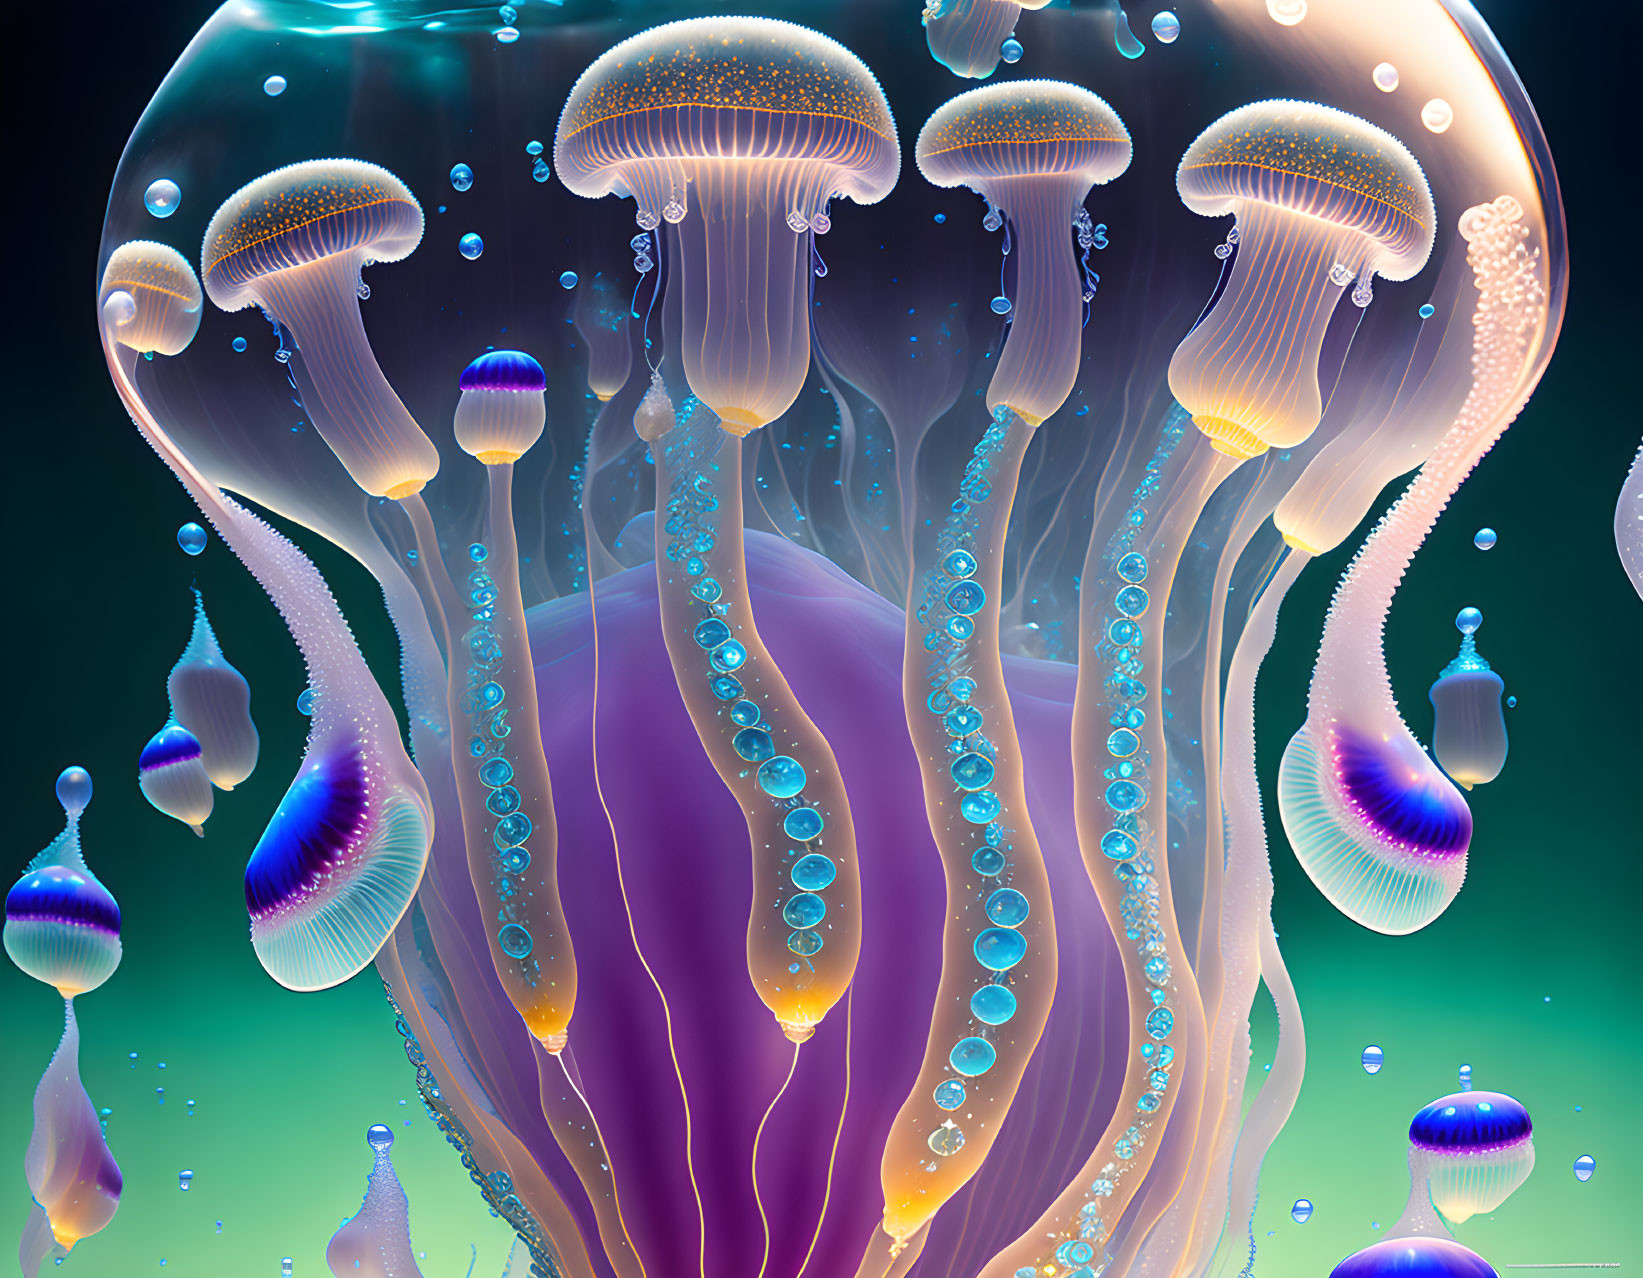 Translucent jellyfish digital artwork in underwater scene